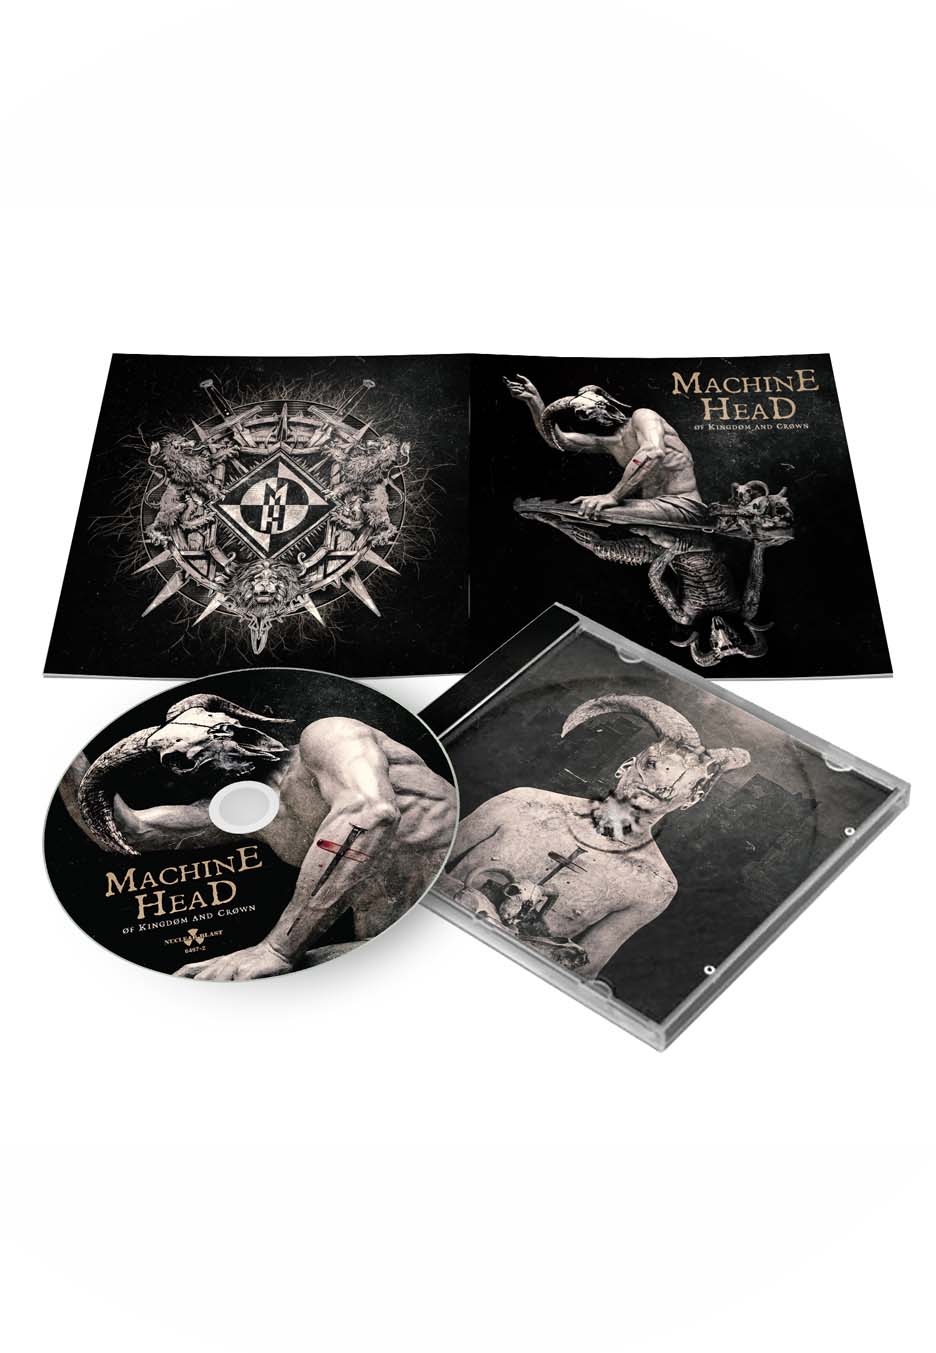 Machine Head - ØF KINGDØM AND CRØWN - CD